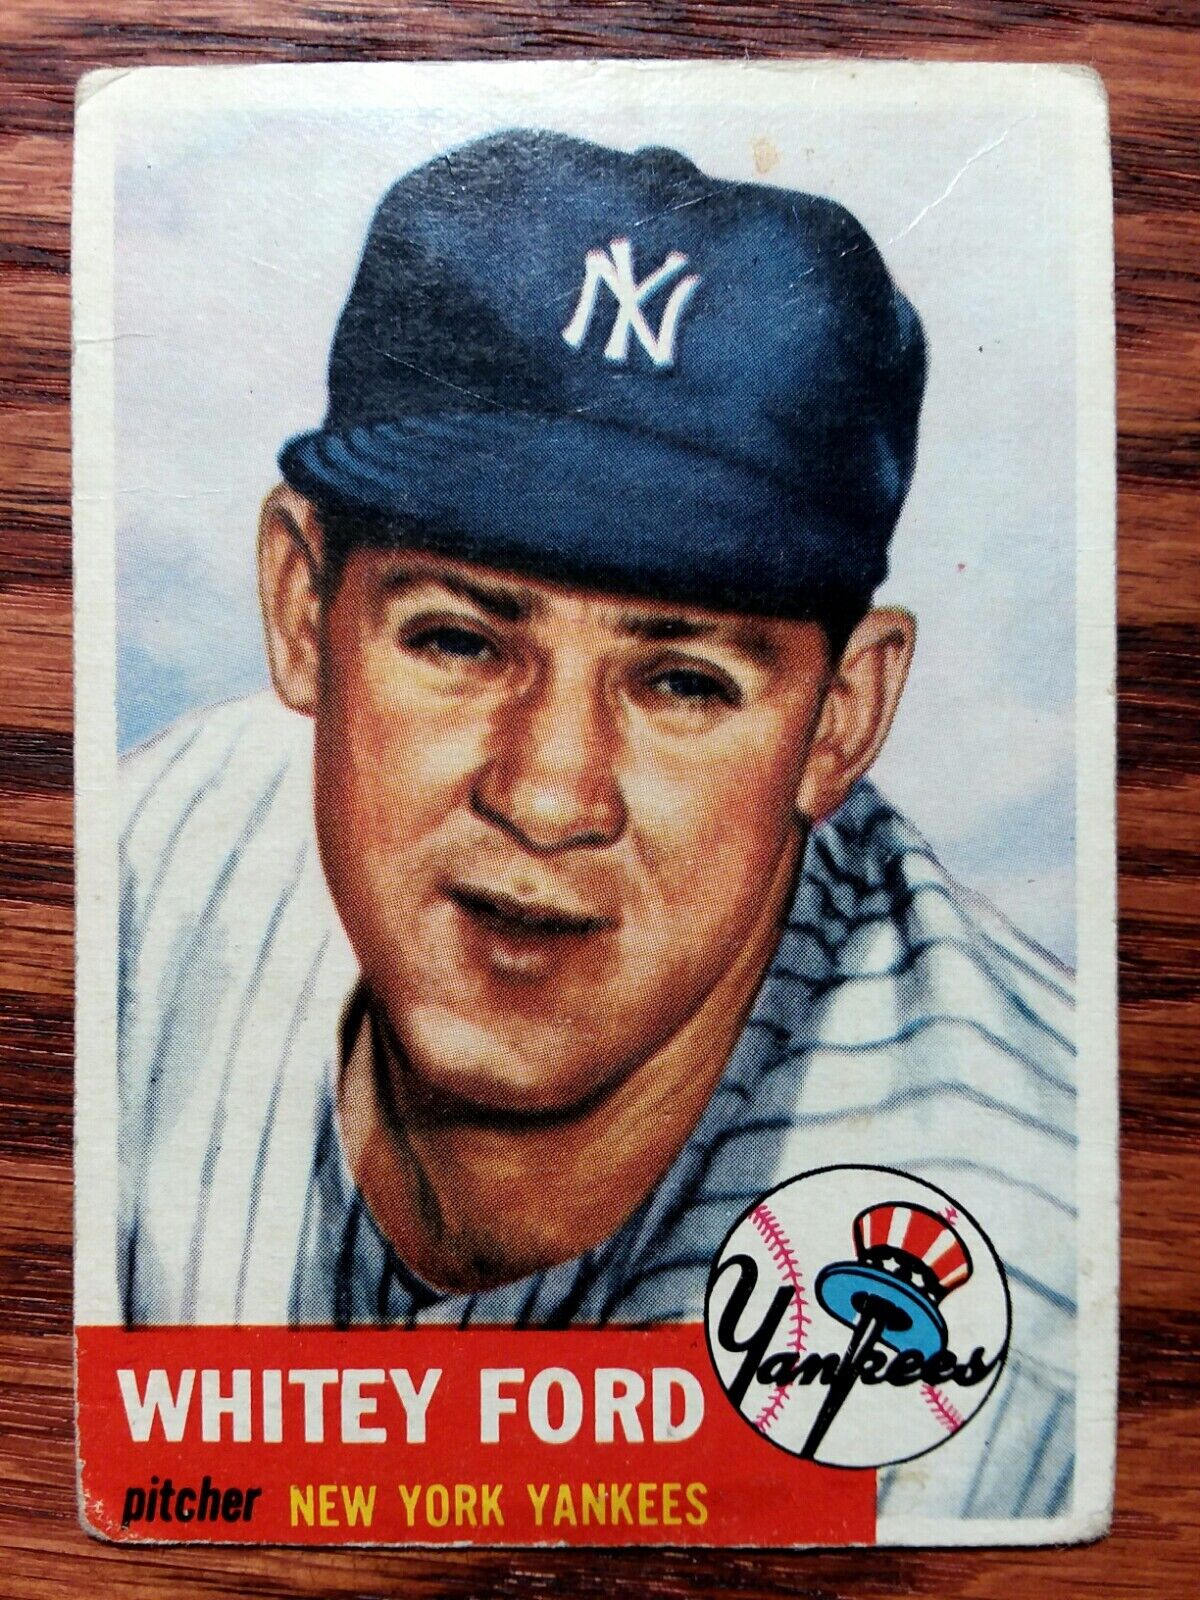 NY Yankees ⚾️ Whitey Ford 1953 Topps Baseball Card #207 ⚾️ Original